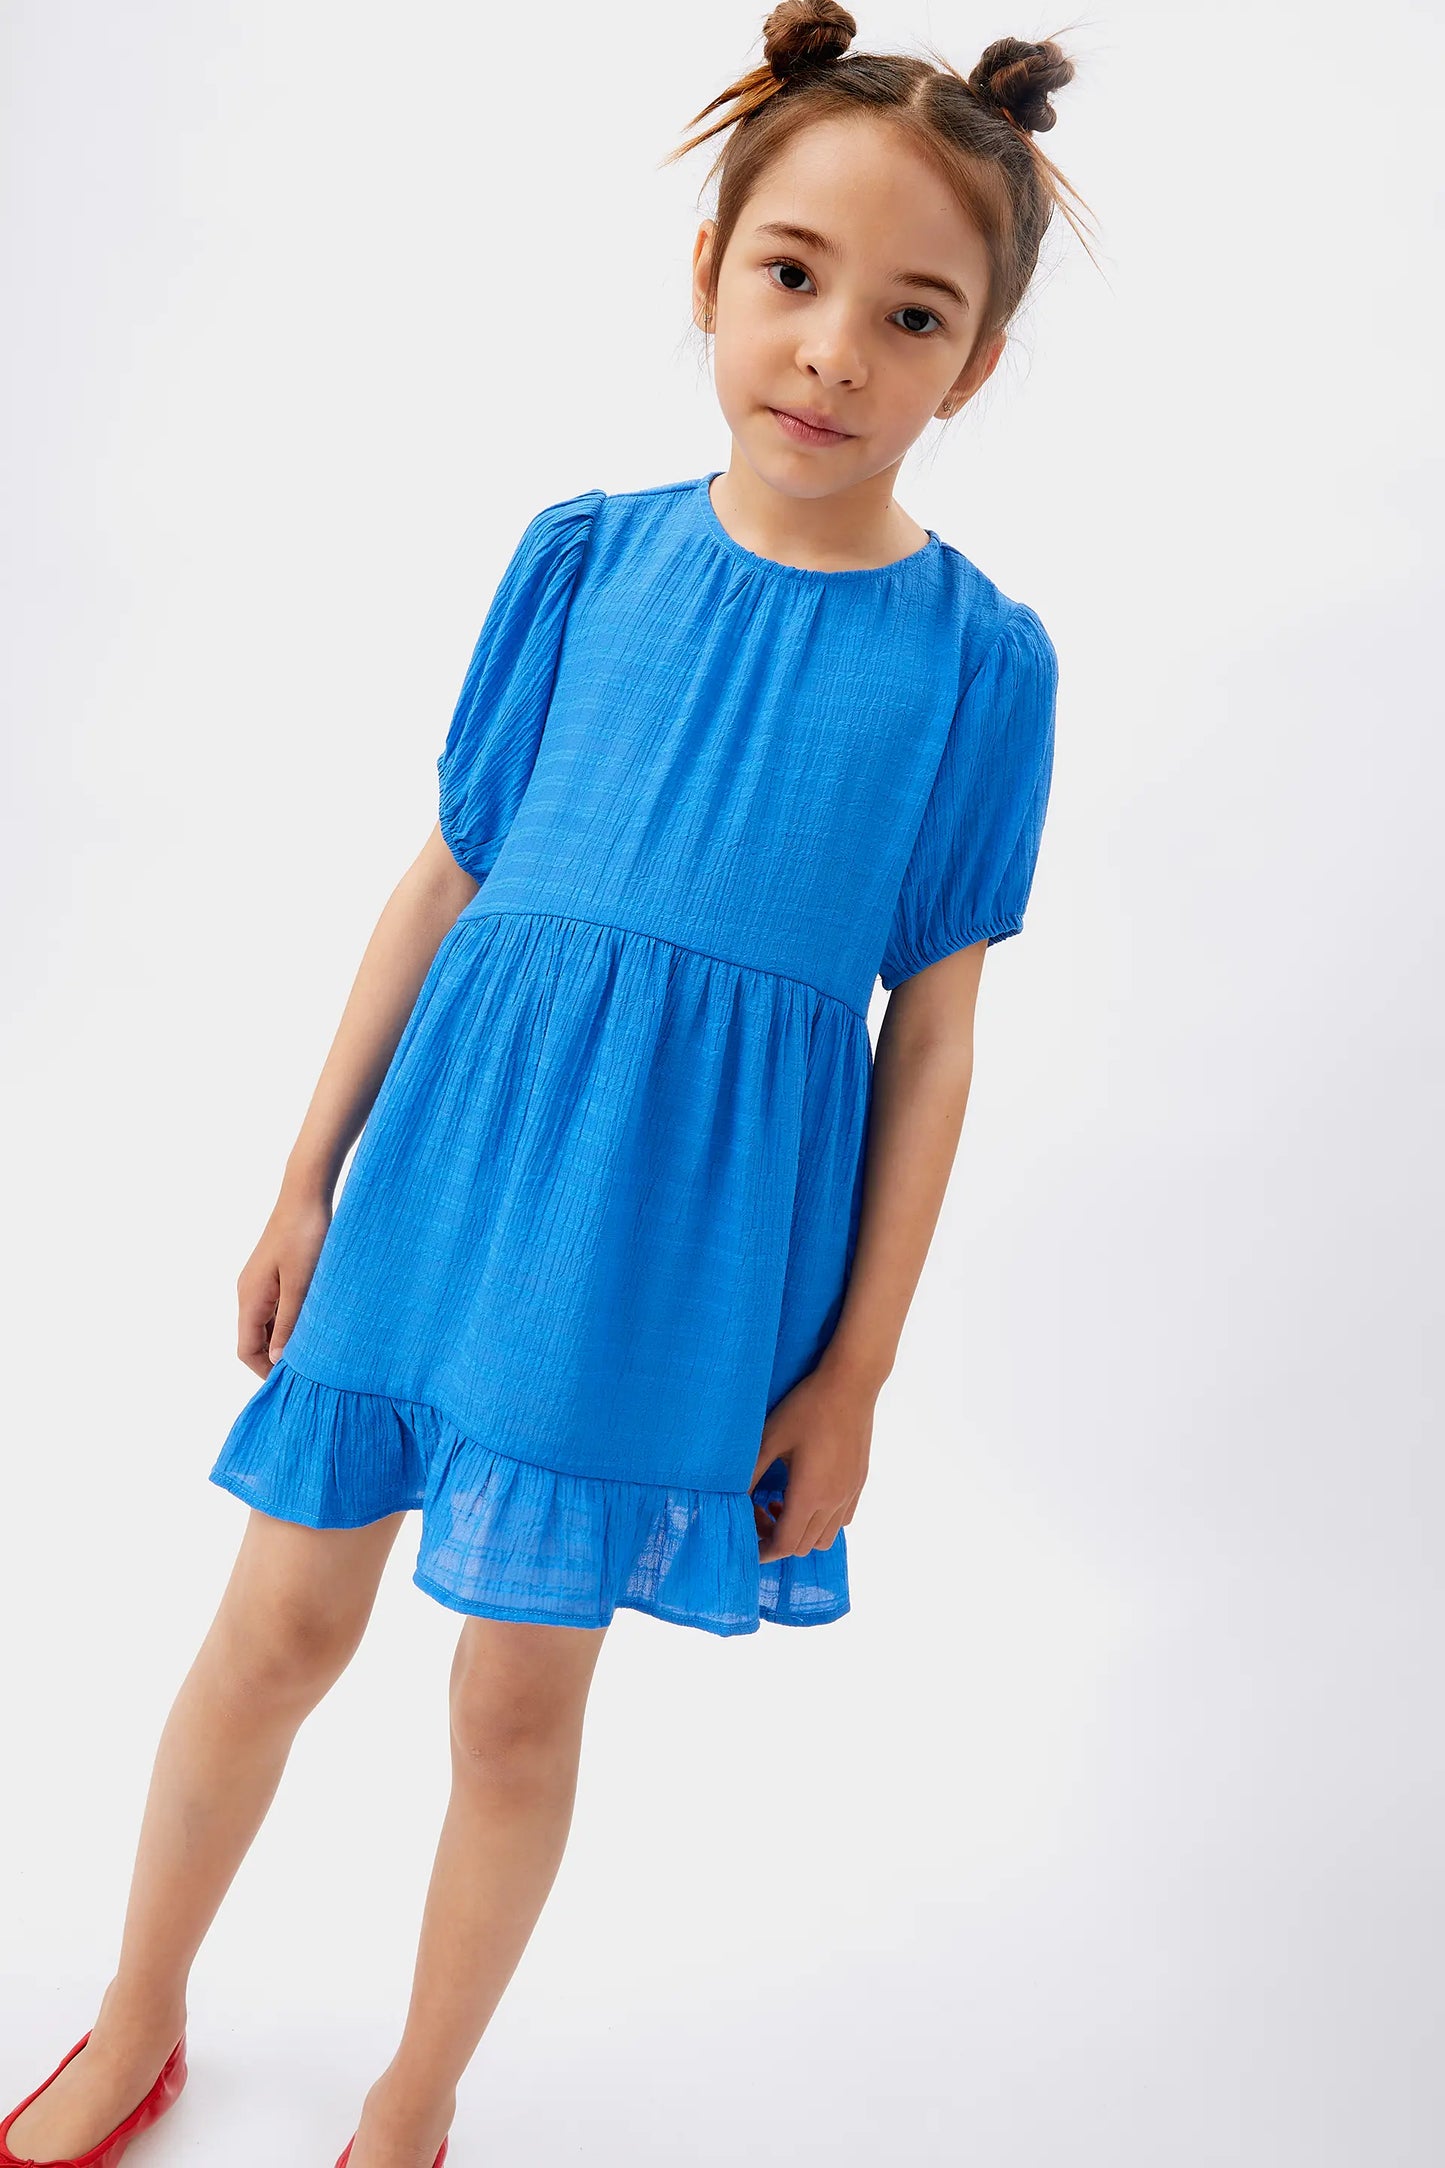 Vestido corto de niña azul